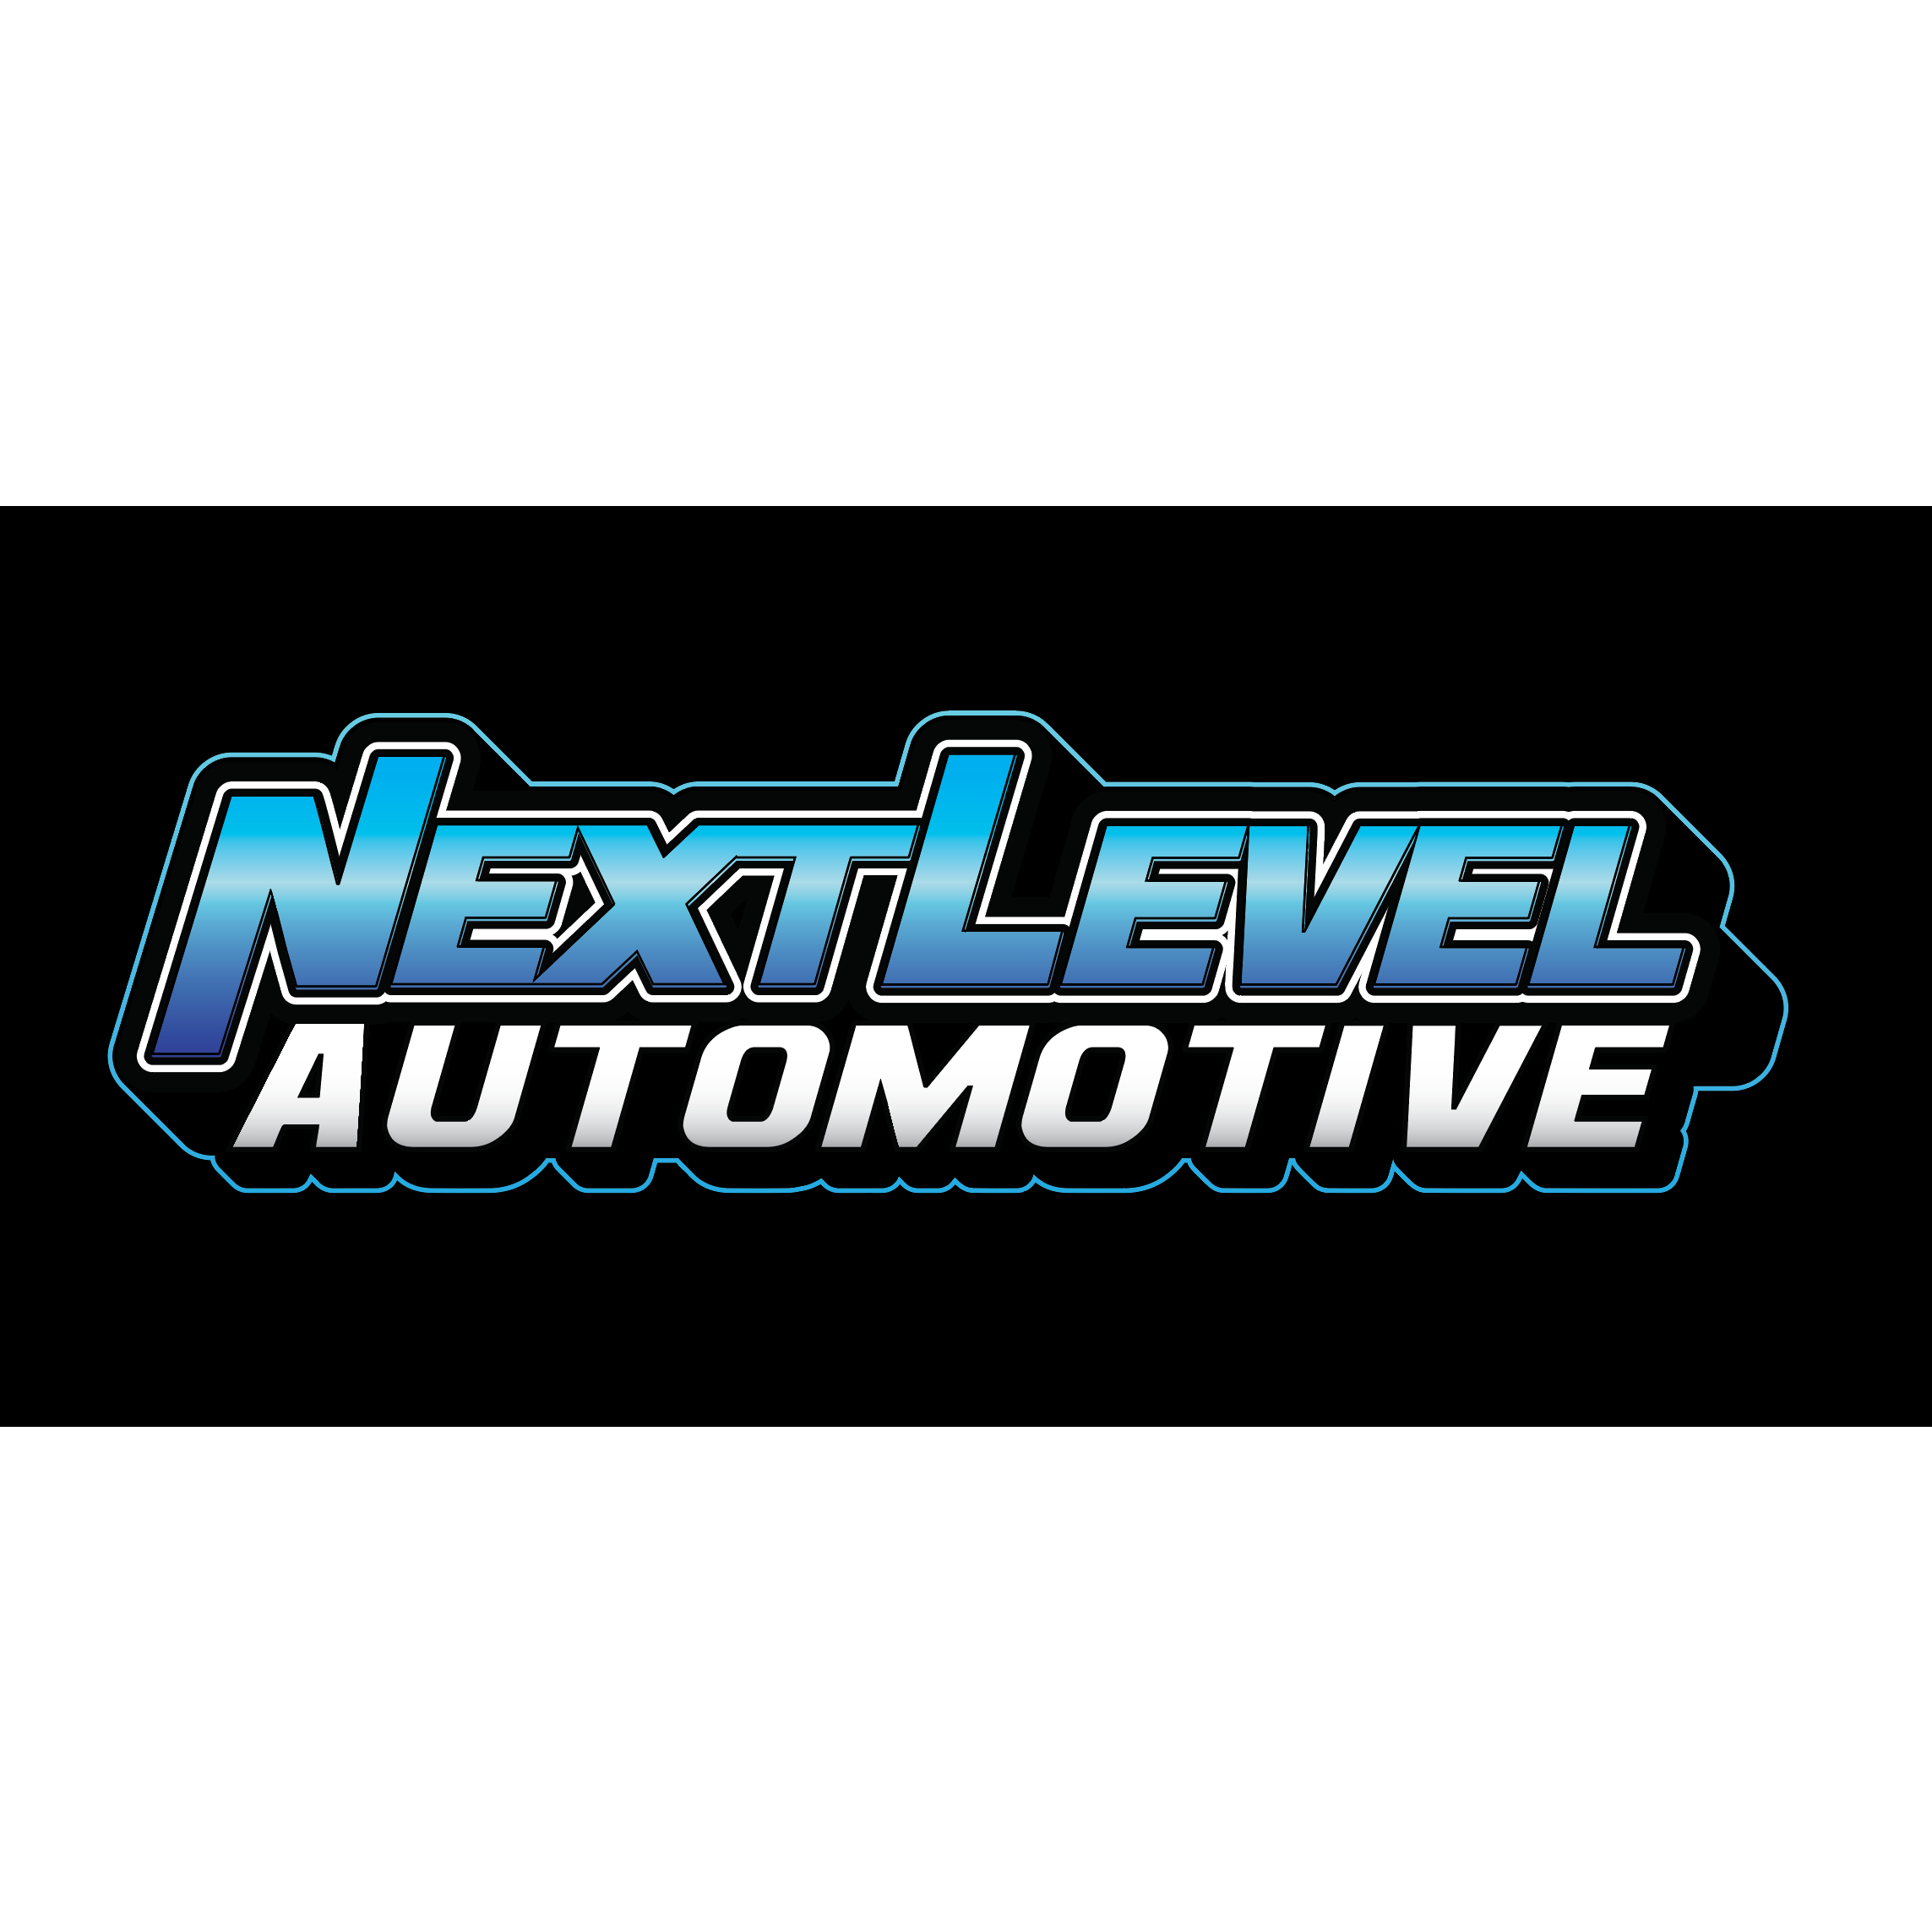 Next Level Automotive